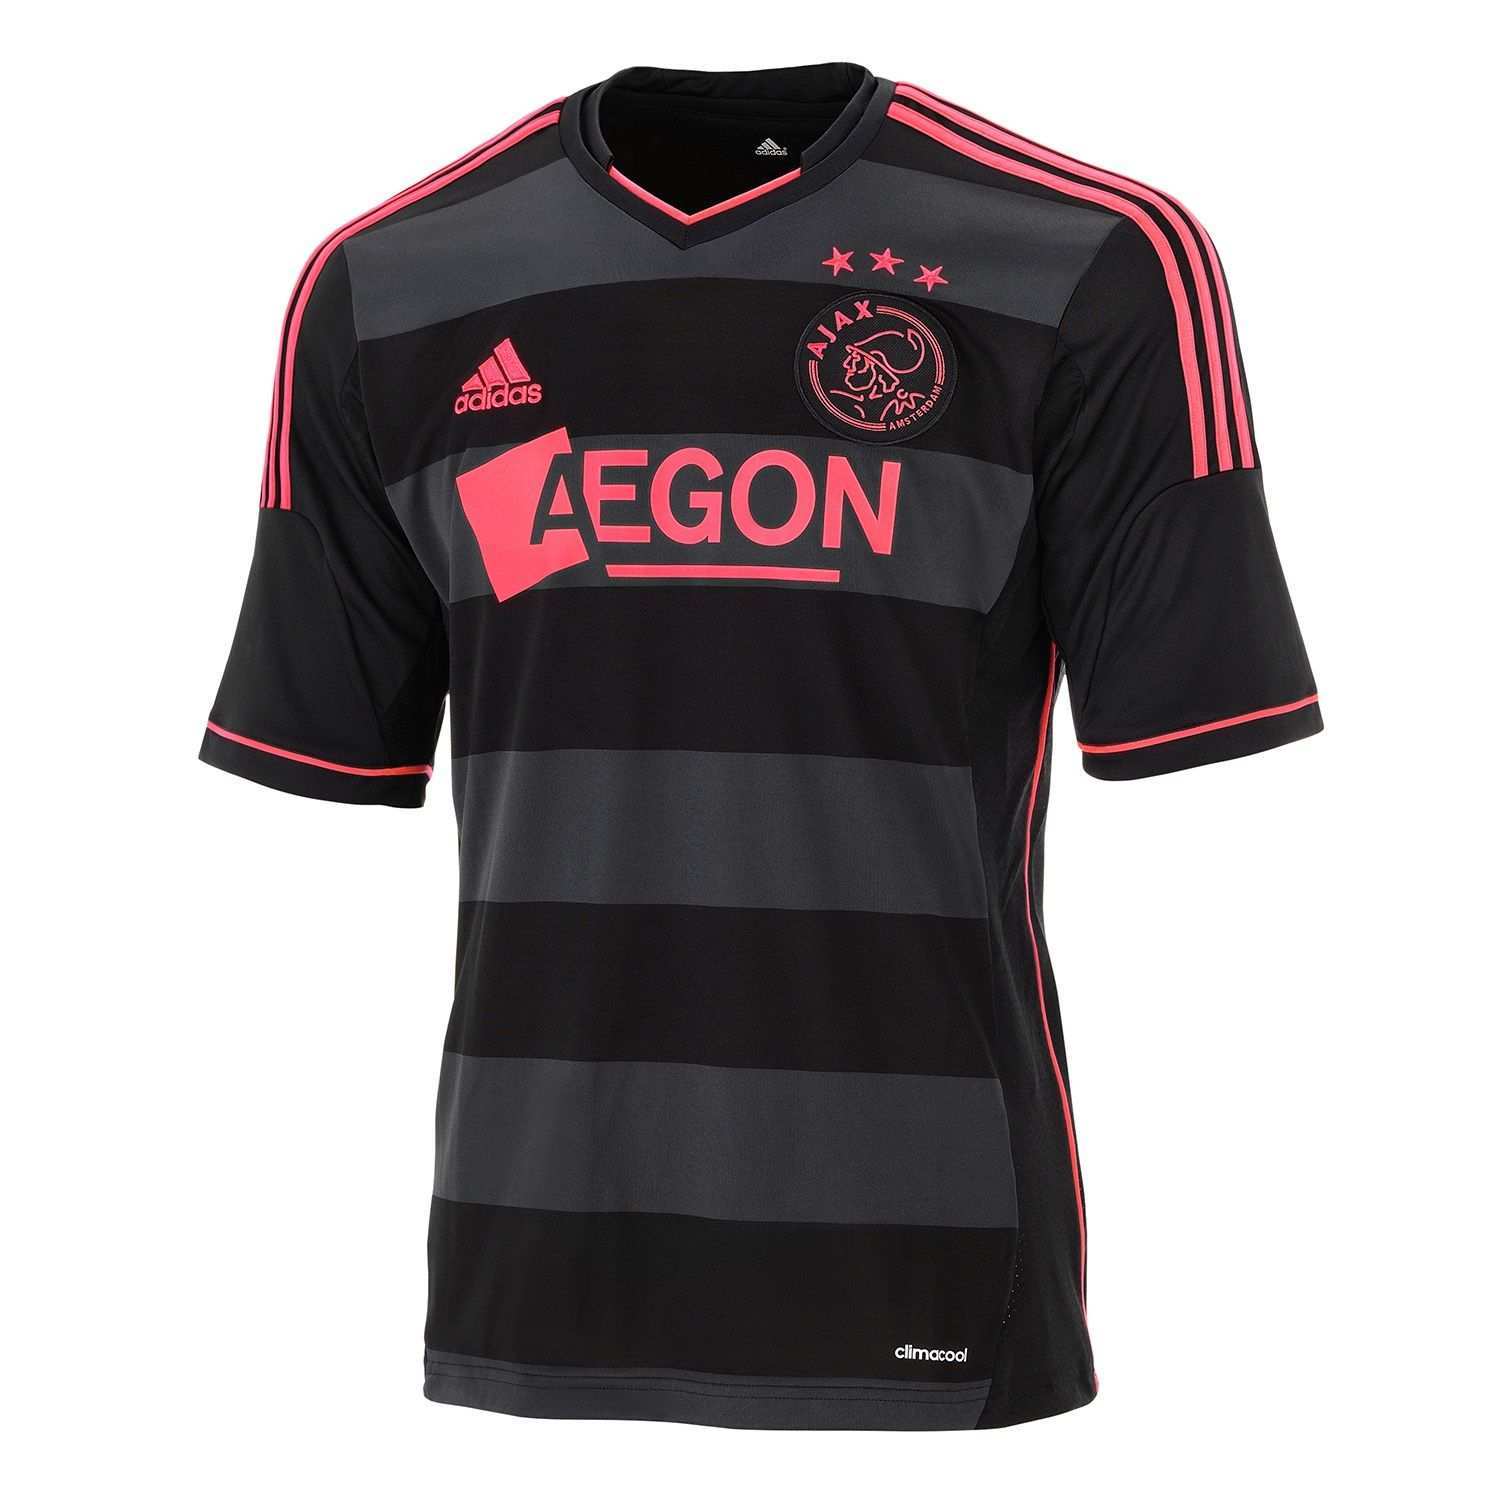 Away Kit Matchwear Ajax Shop Soccer Shirts Soccer Jersey Soccer Tshirts